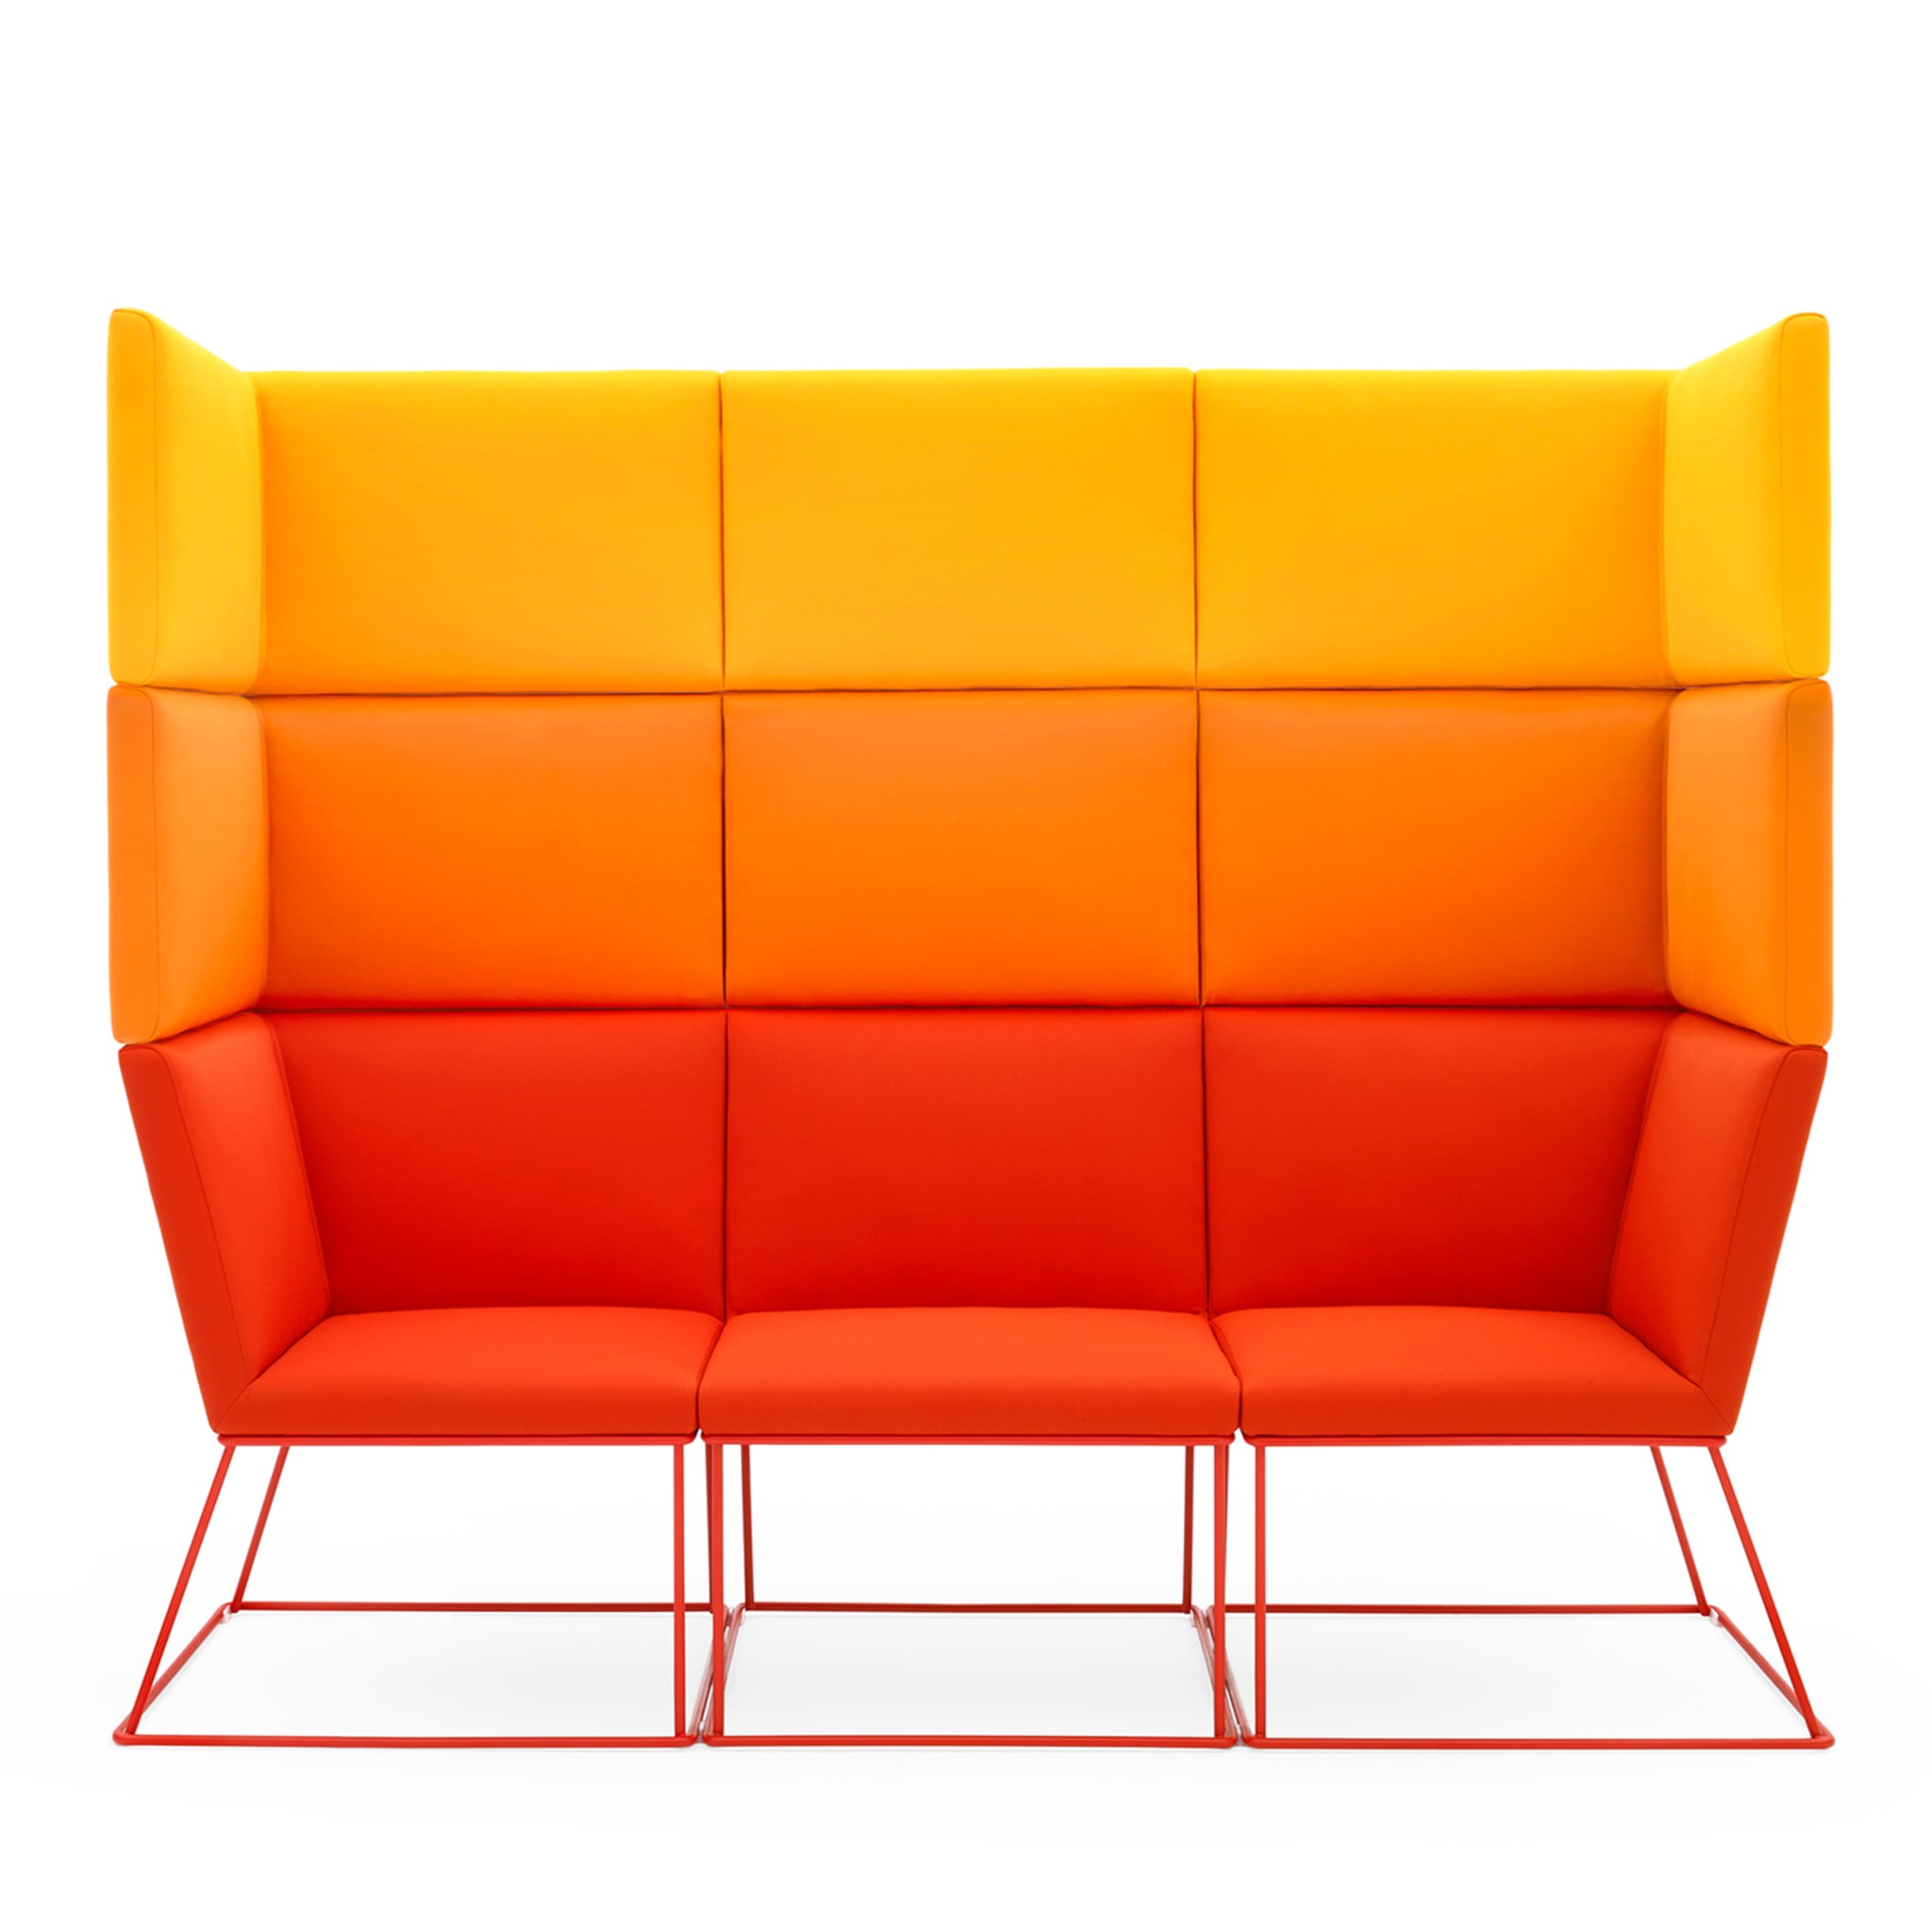 GEORGE modular sofa #3 by Basaglia + Rota Nodari - Main view